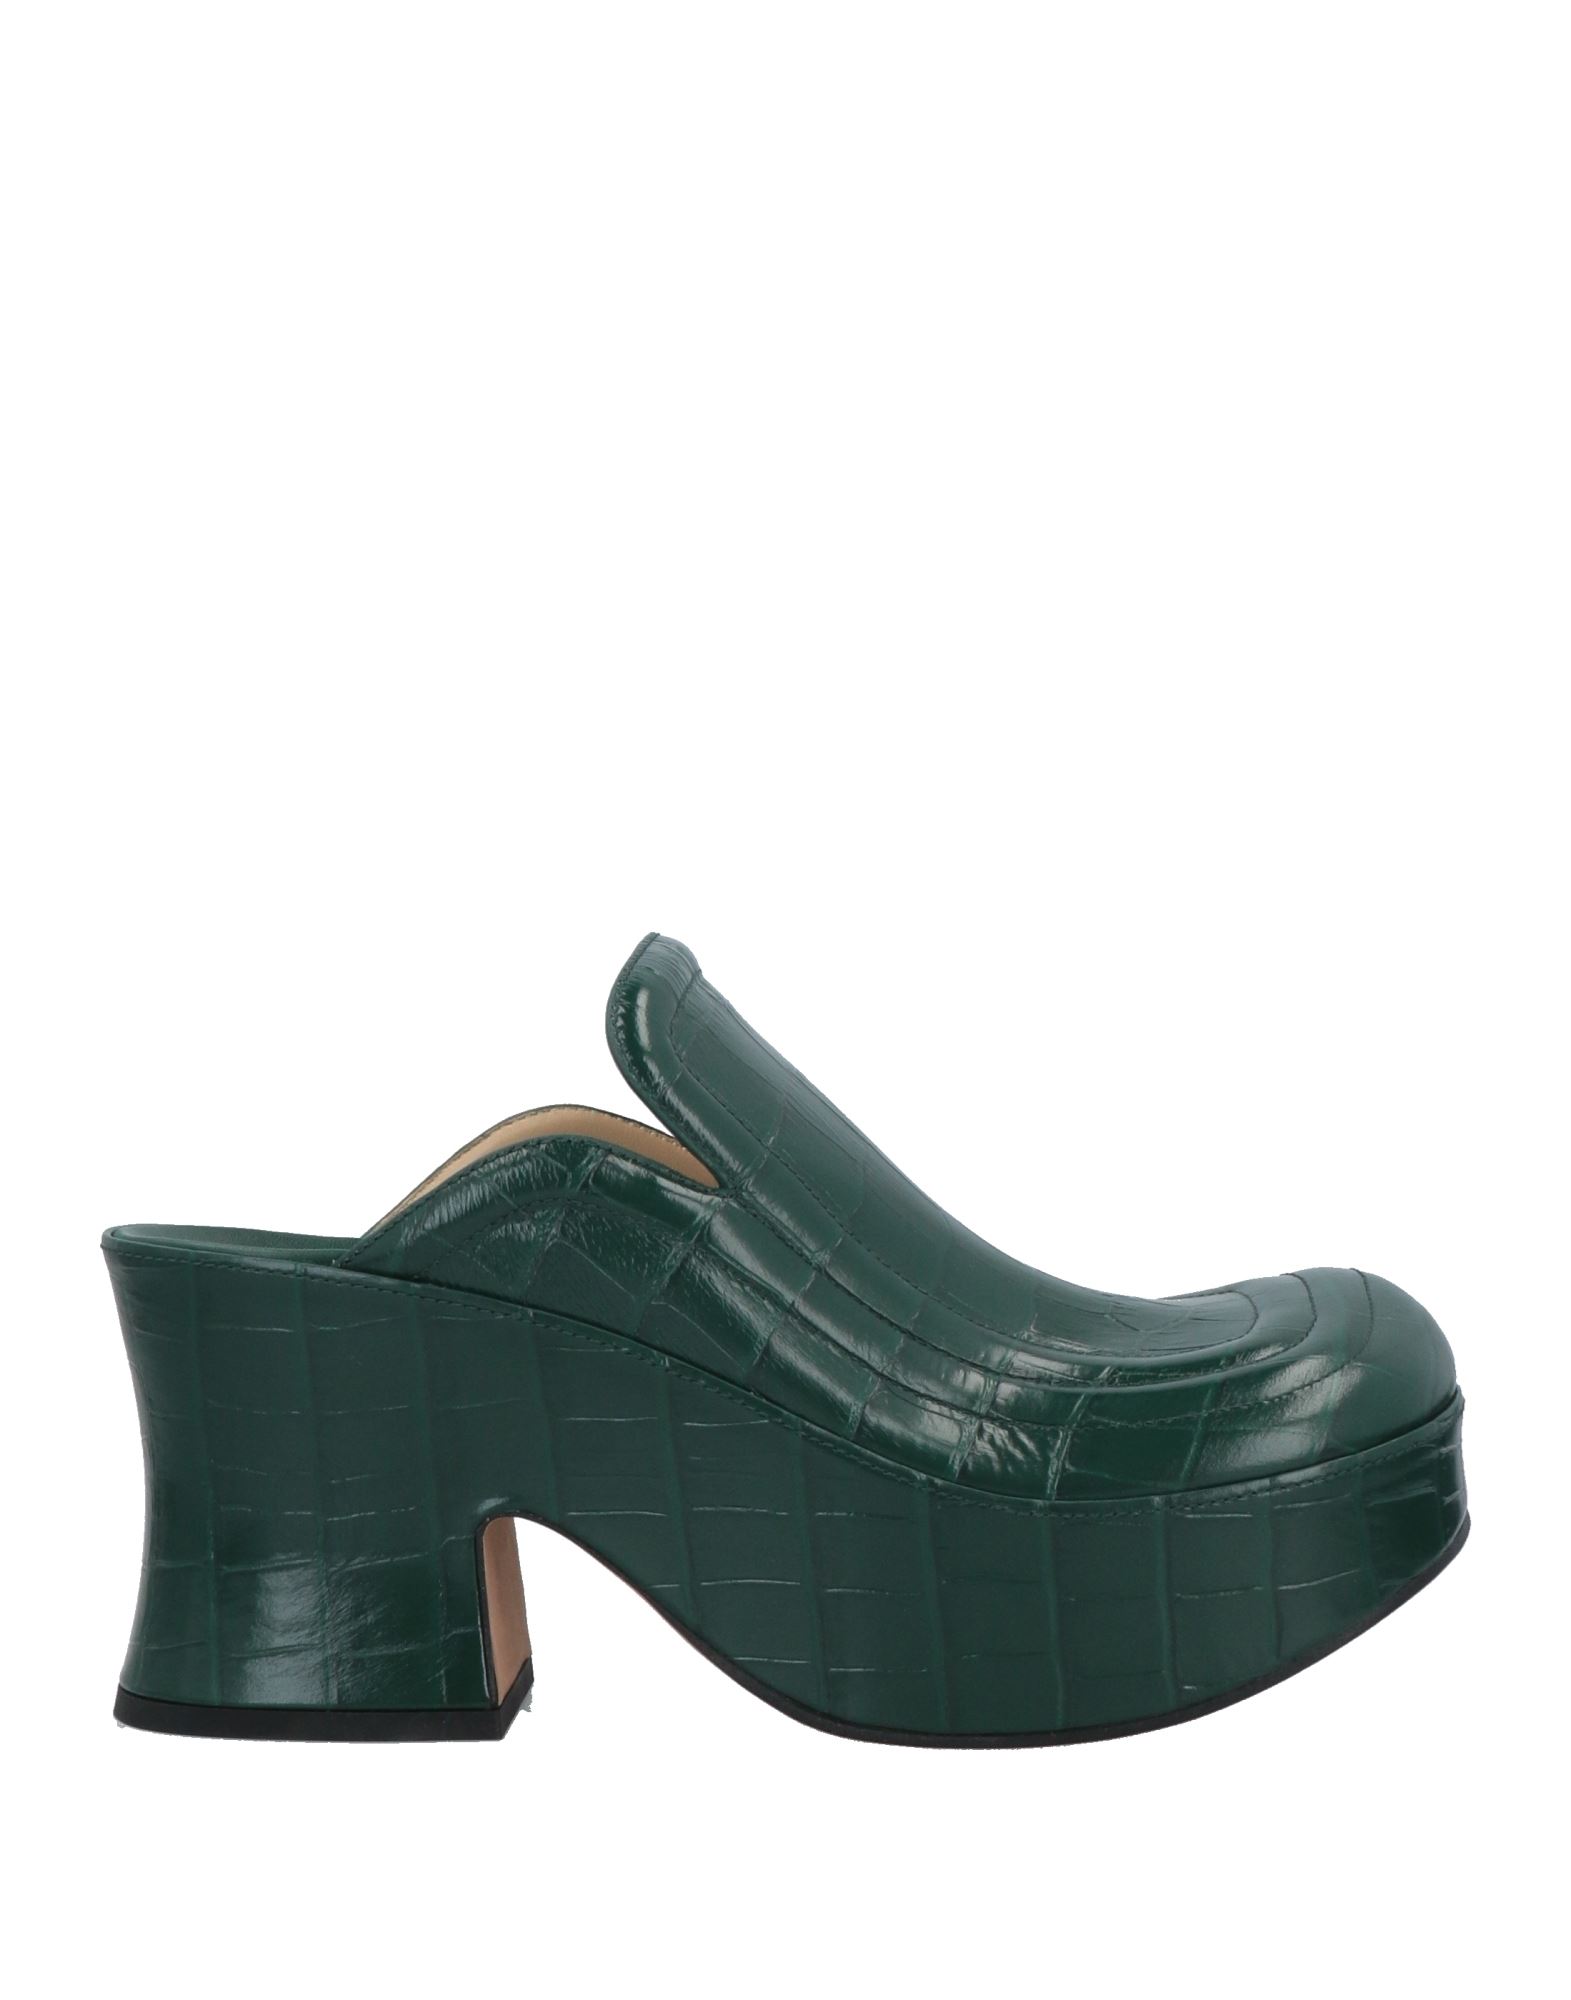 Bottega Veneta Woman Mules & Clogs Dark Green Size 7 Soft Leather